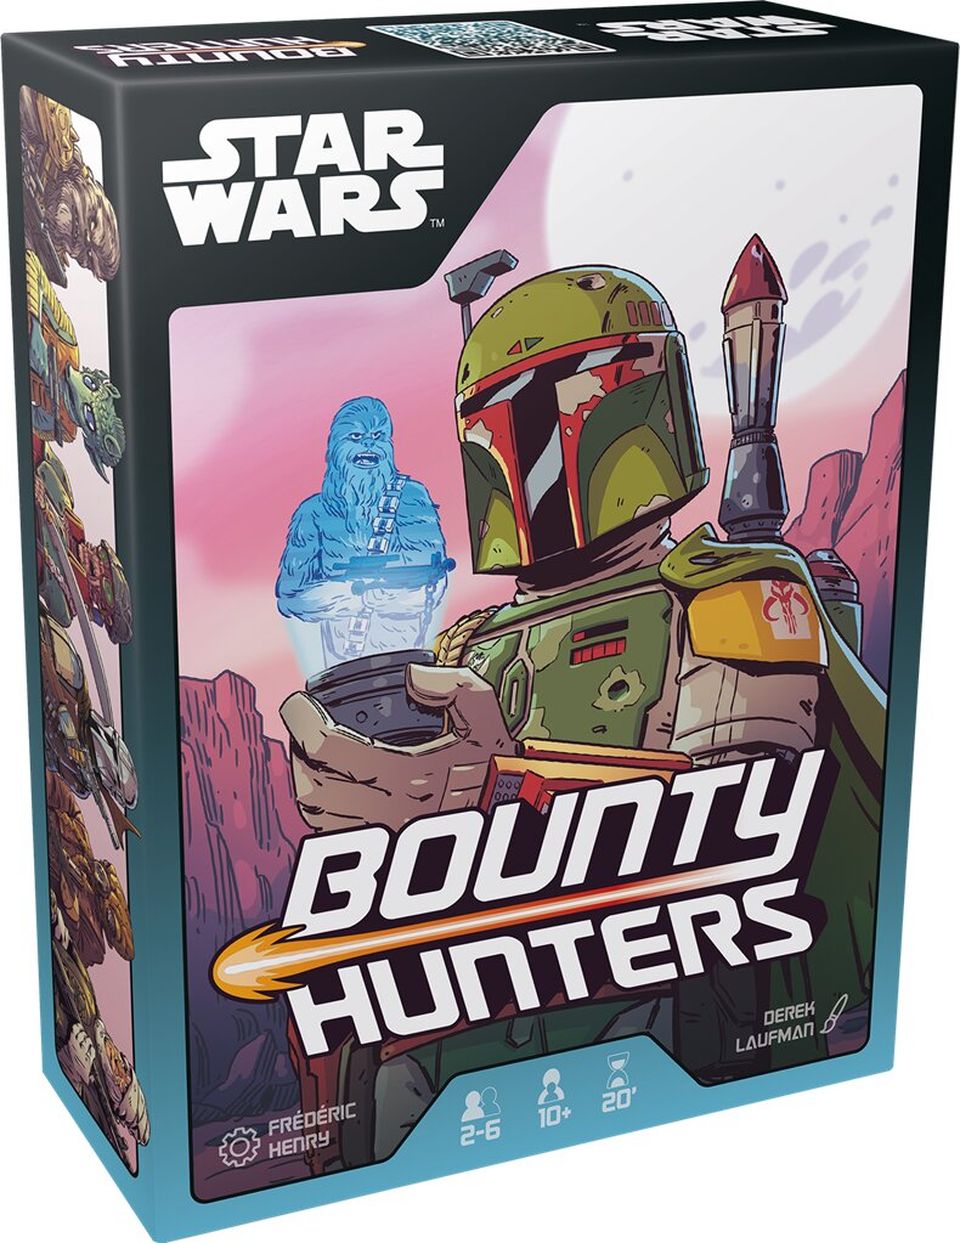 Star Wars : Bounty Hunters image